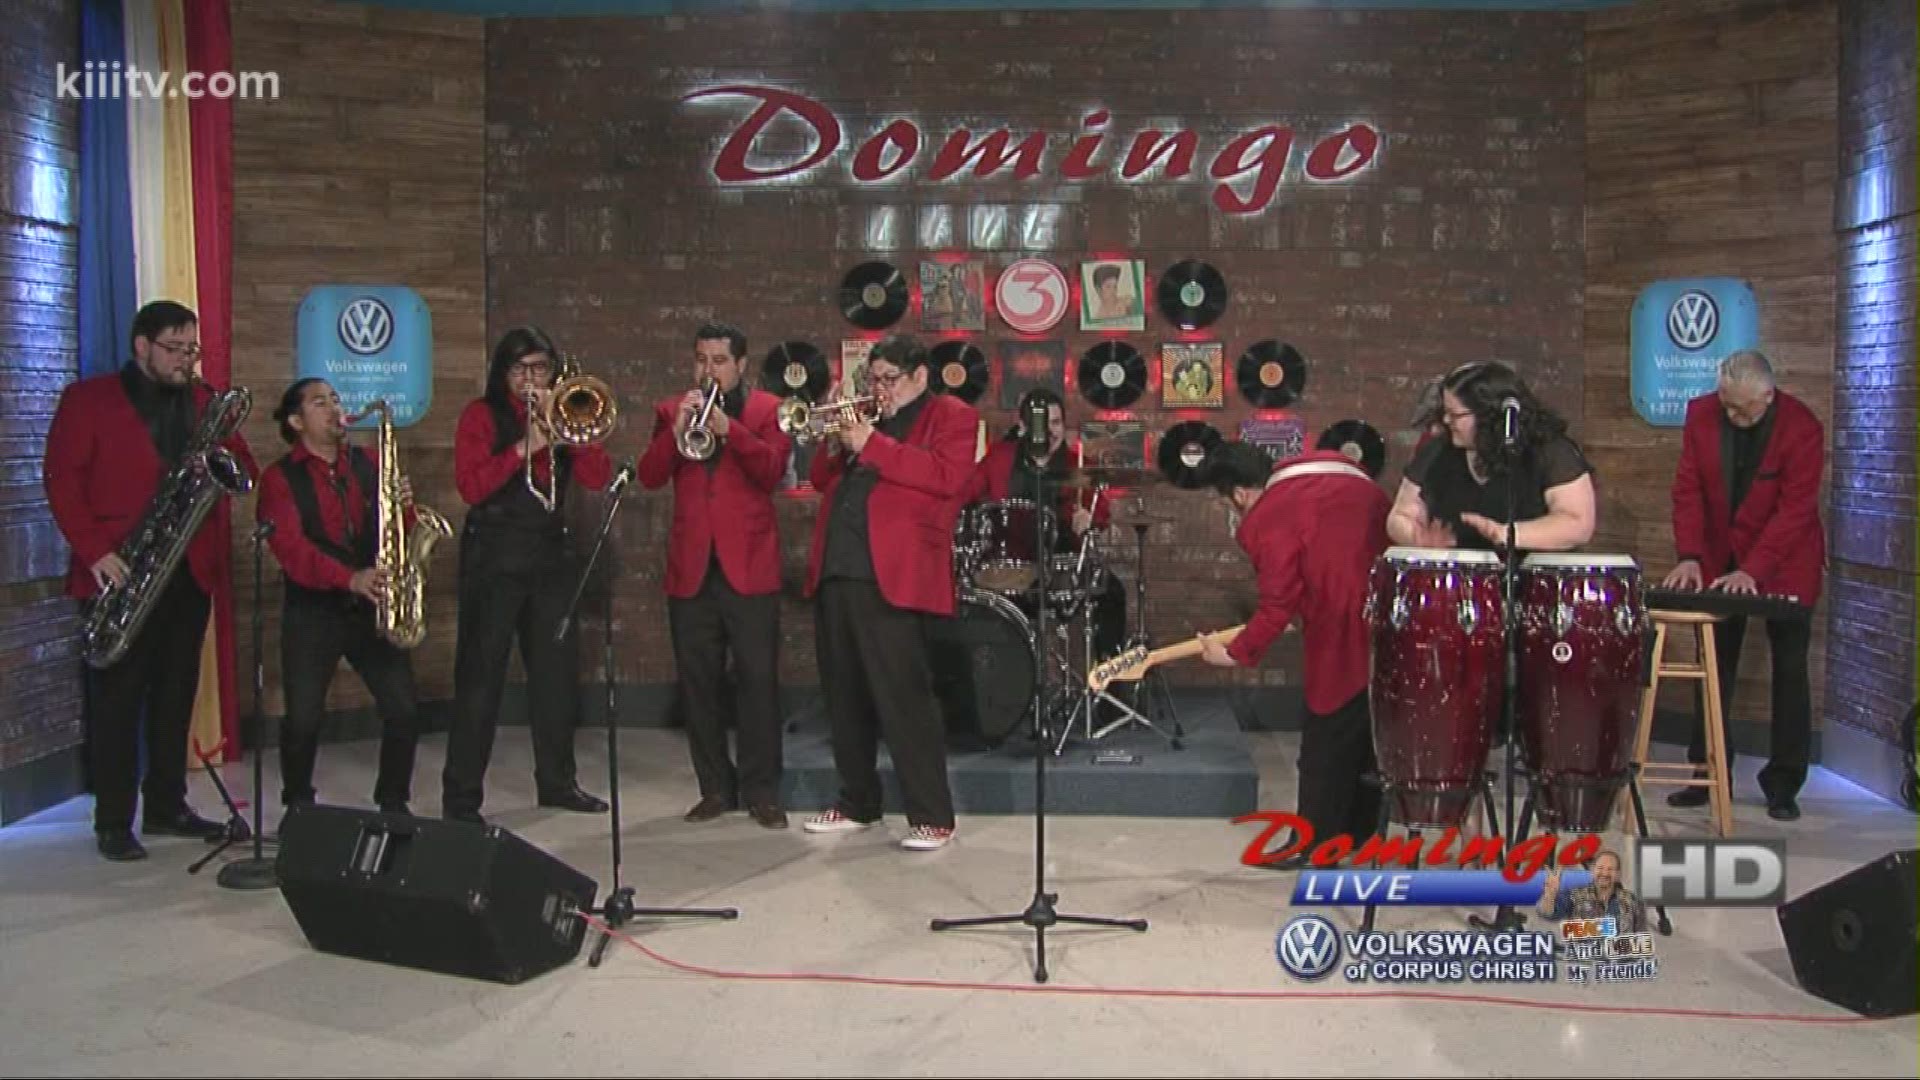 La 45 performing "La 45 Anthem" on Domingo Live.